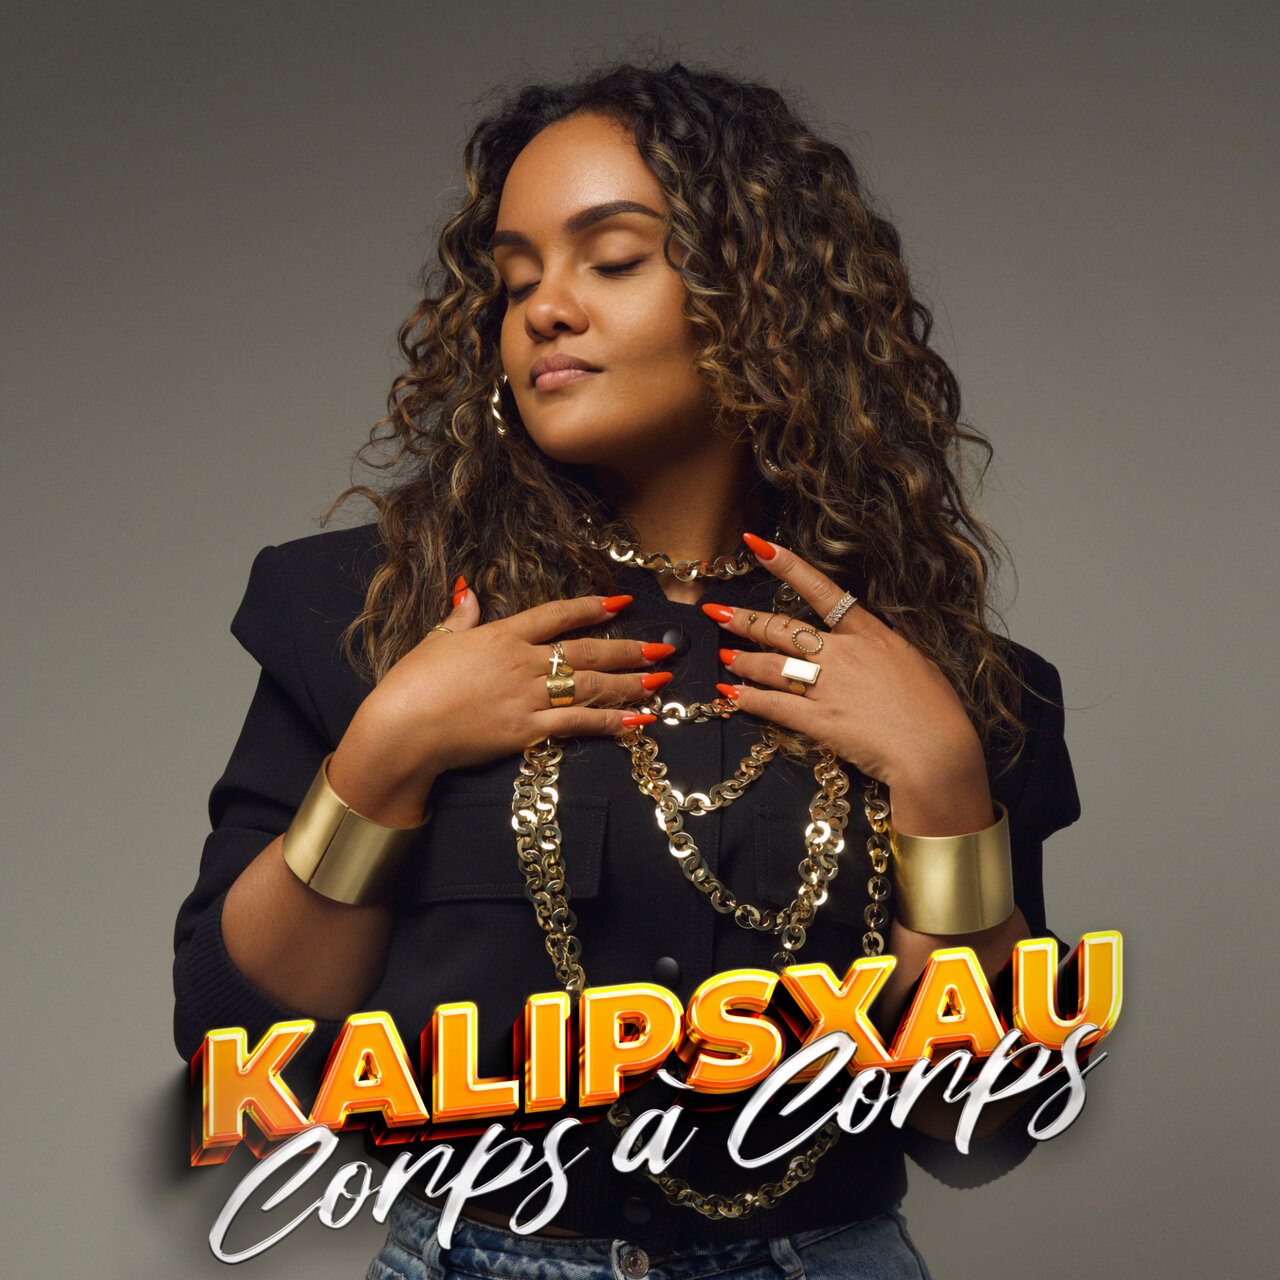 Kalipsxau - Corps À Corps (Cover)